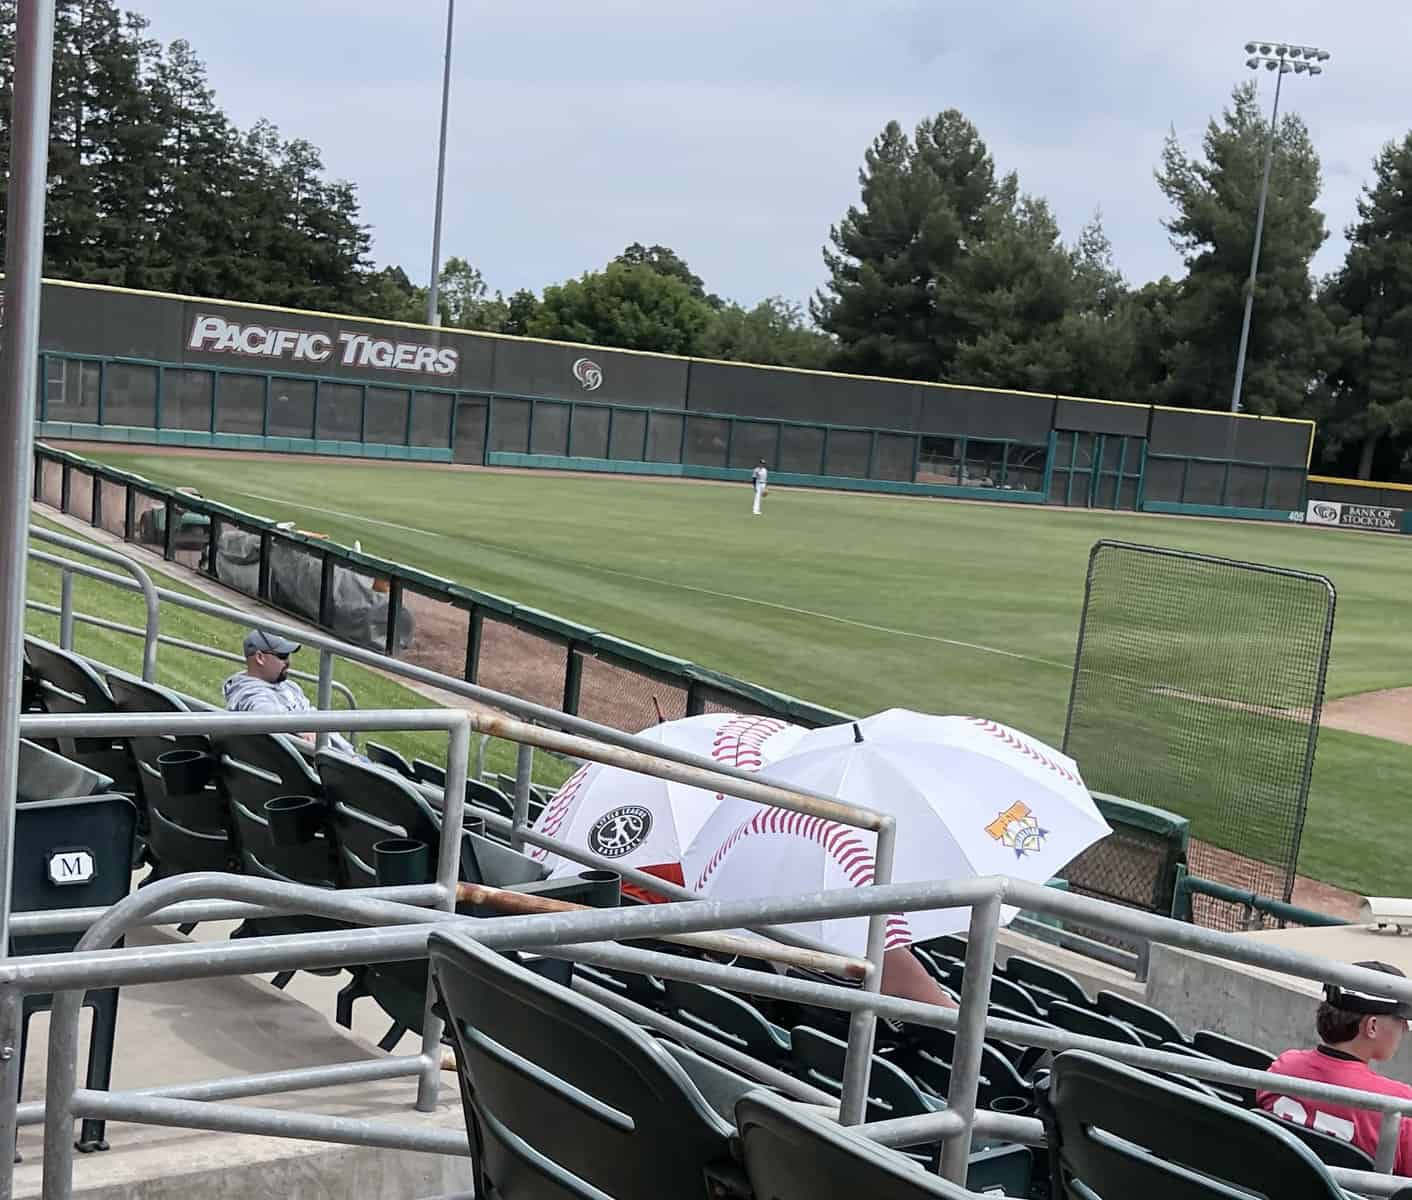 fans use umbrellas for shade at baseball game